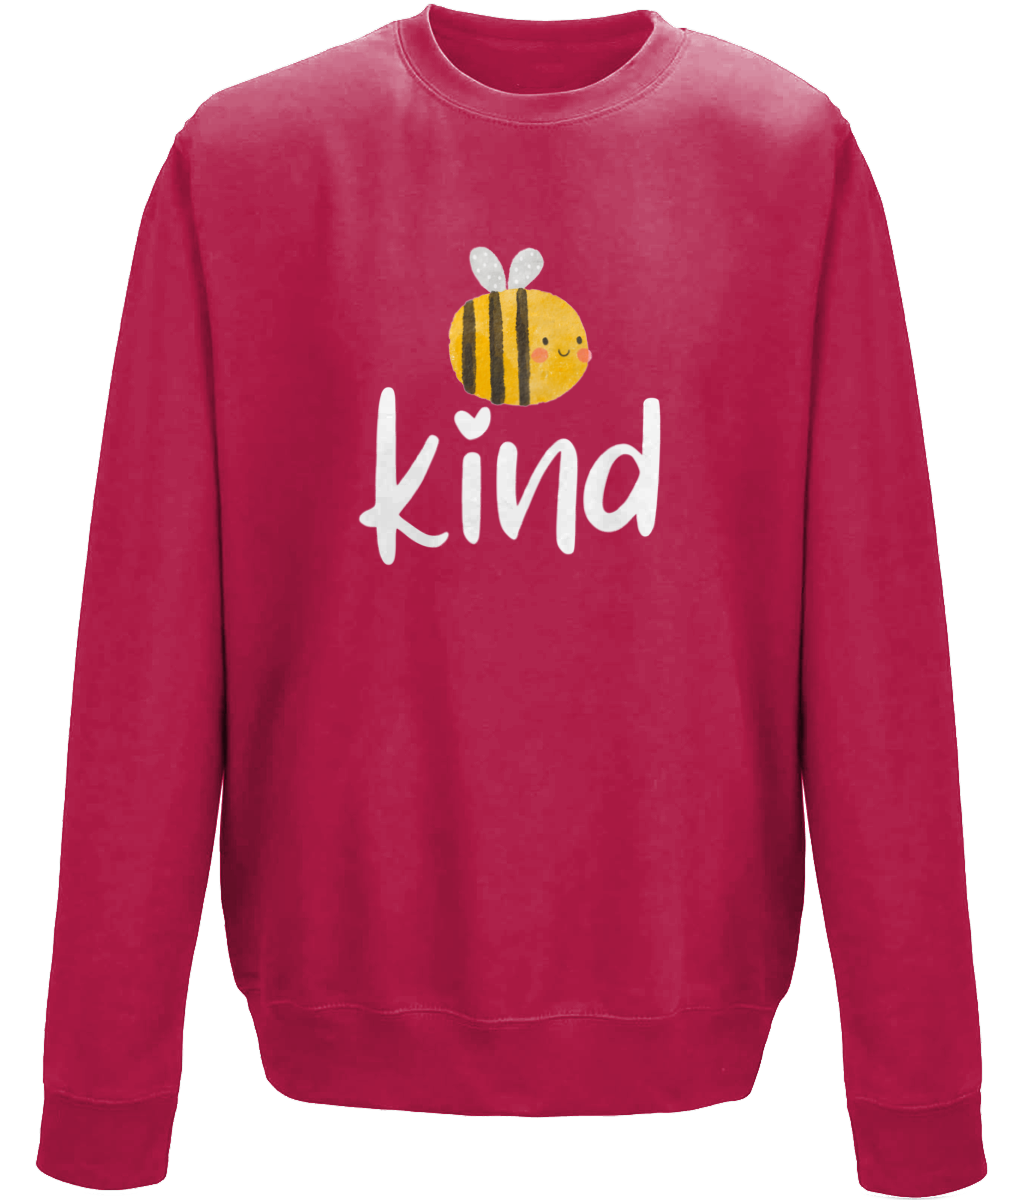 Be Kind 1 | AWDis Sweatshirt.